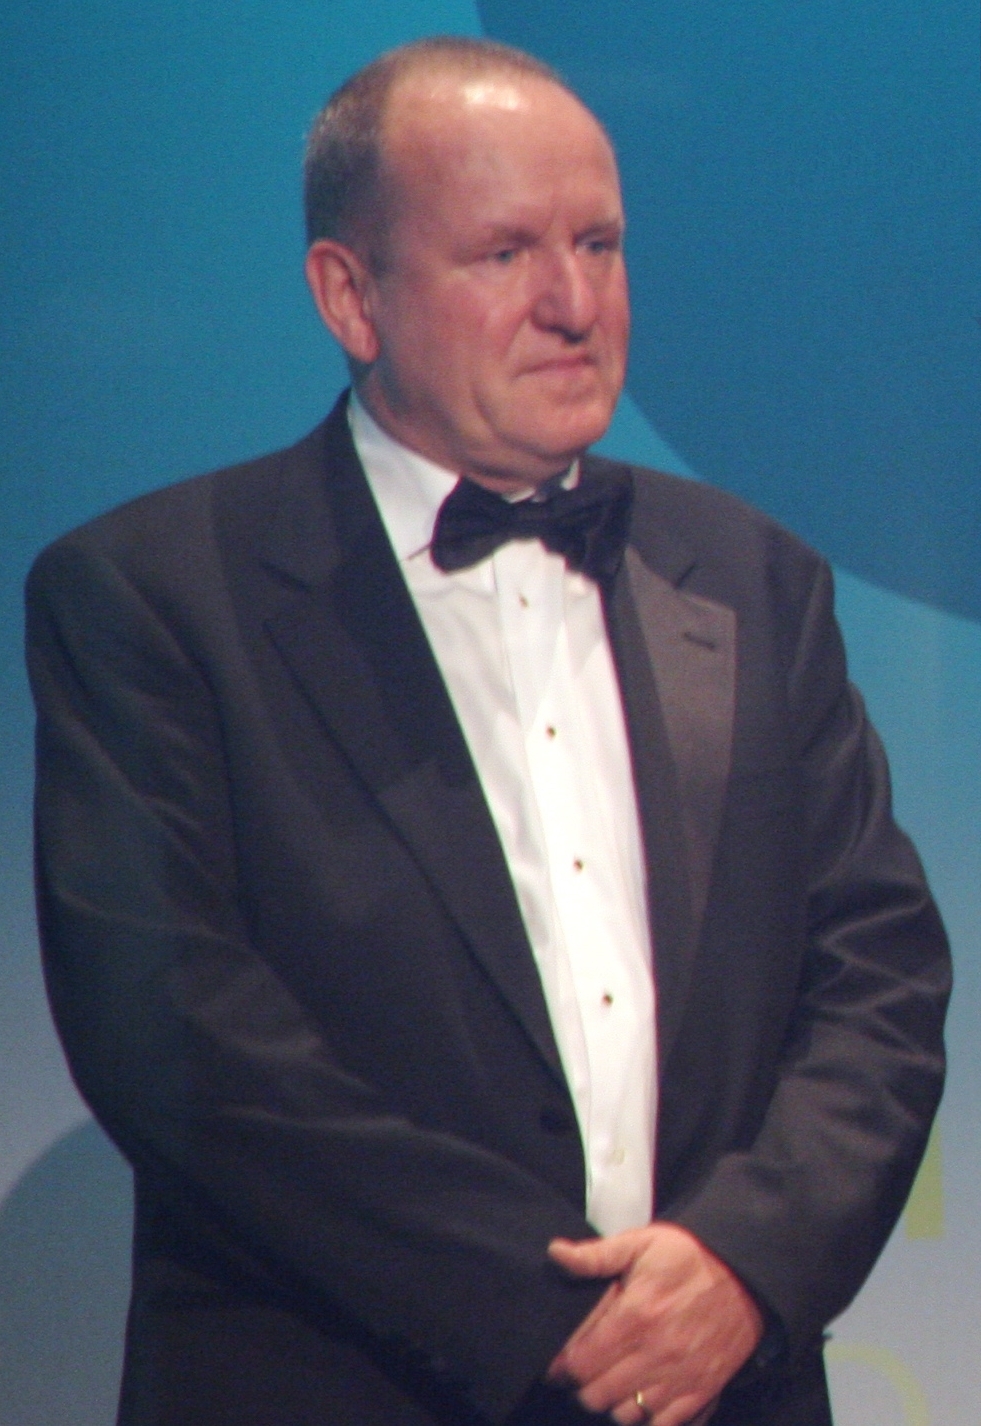 Ian Livingstone during the [[Bafta Awards]] 2006.